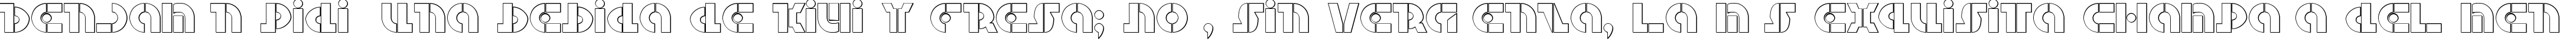 Пример написания шрифтом Questlok Shadow текста на испанском